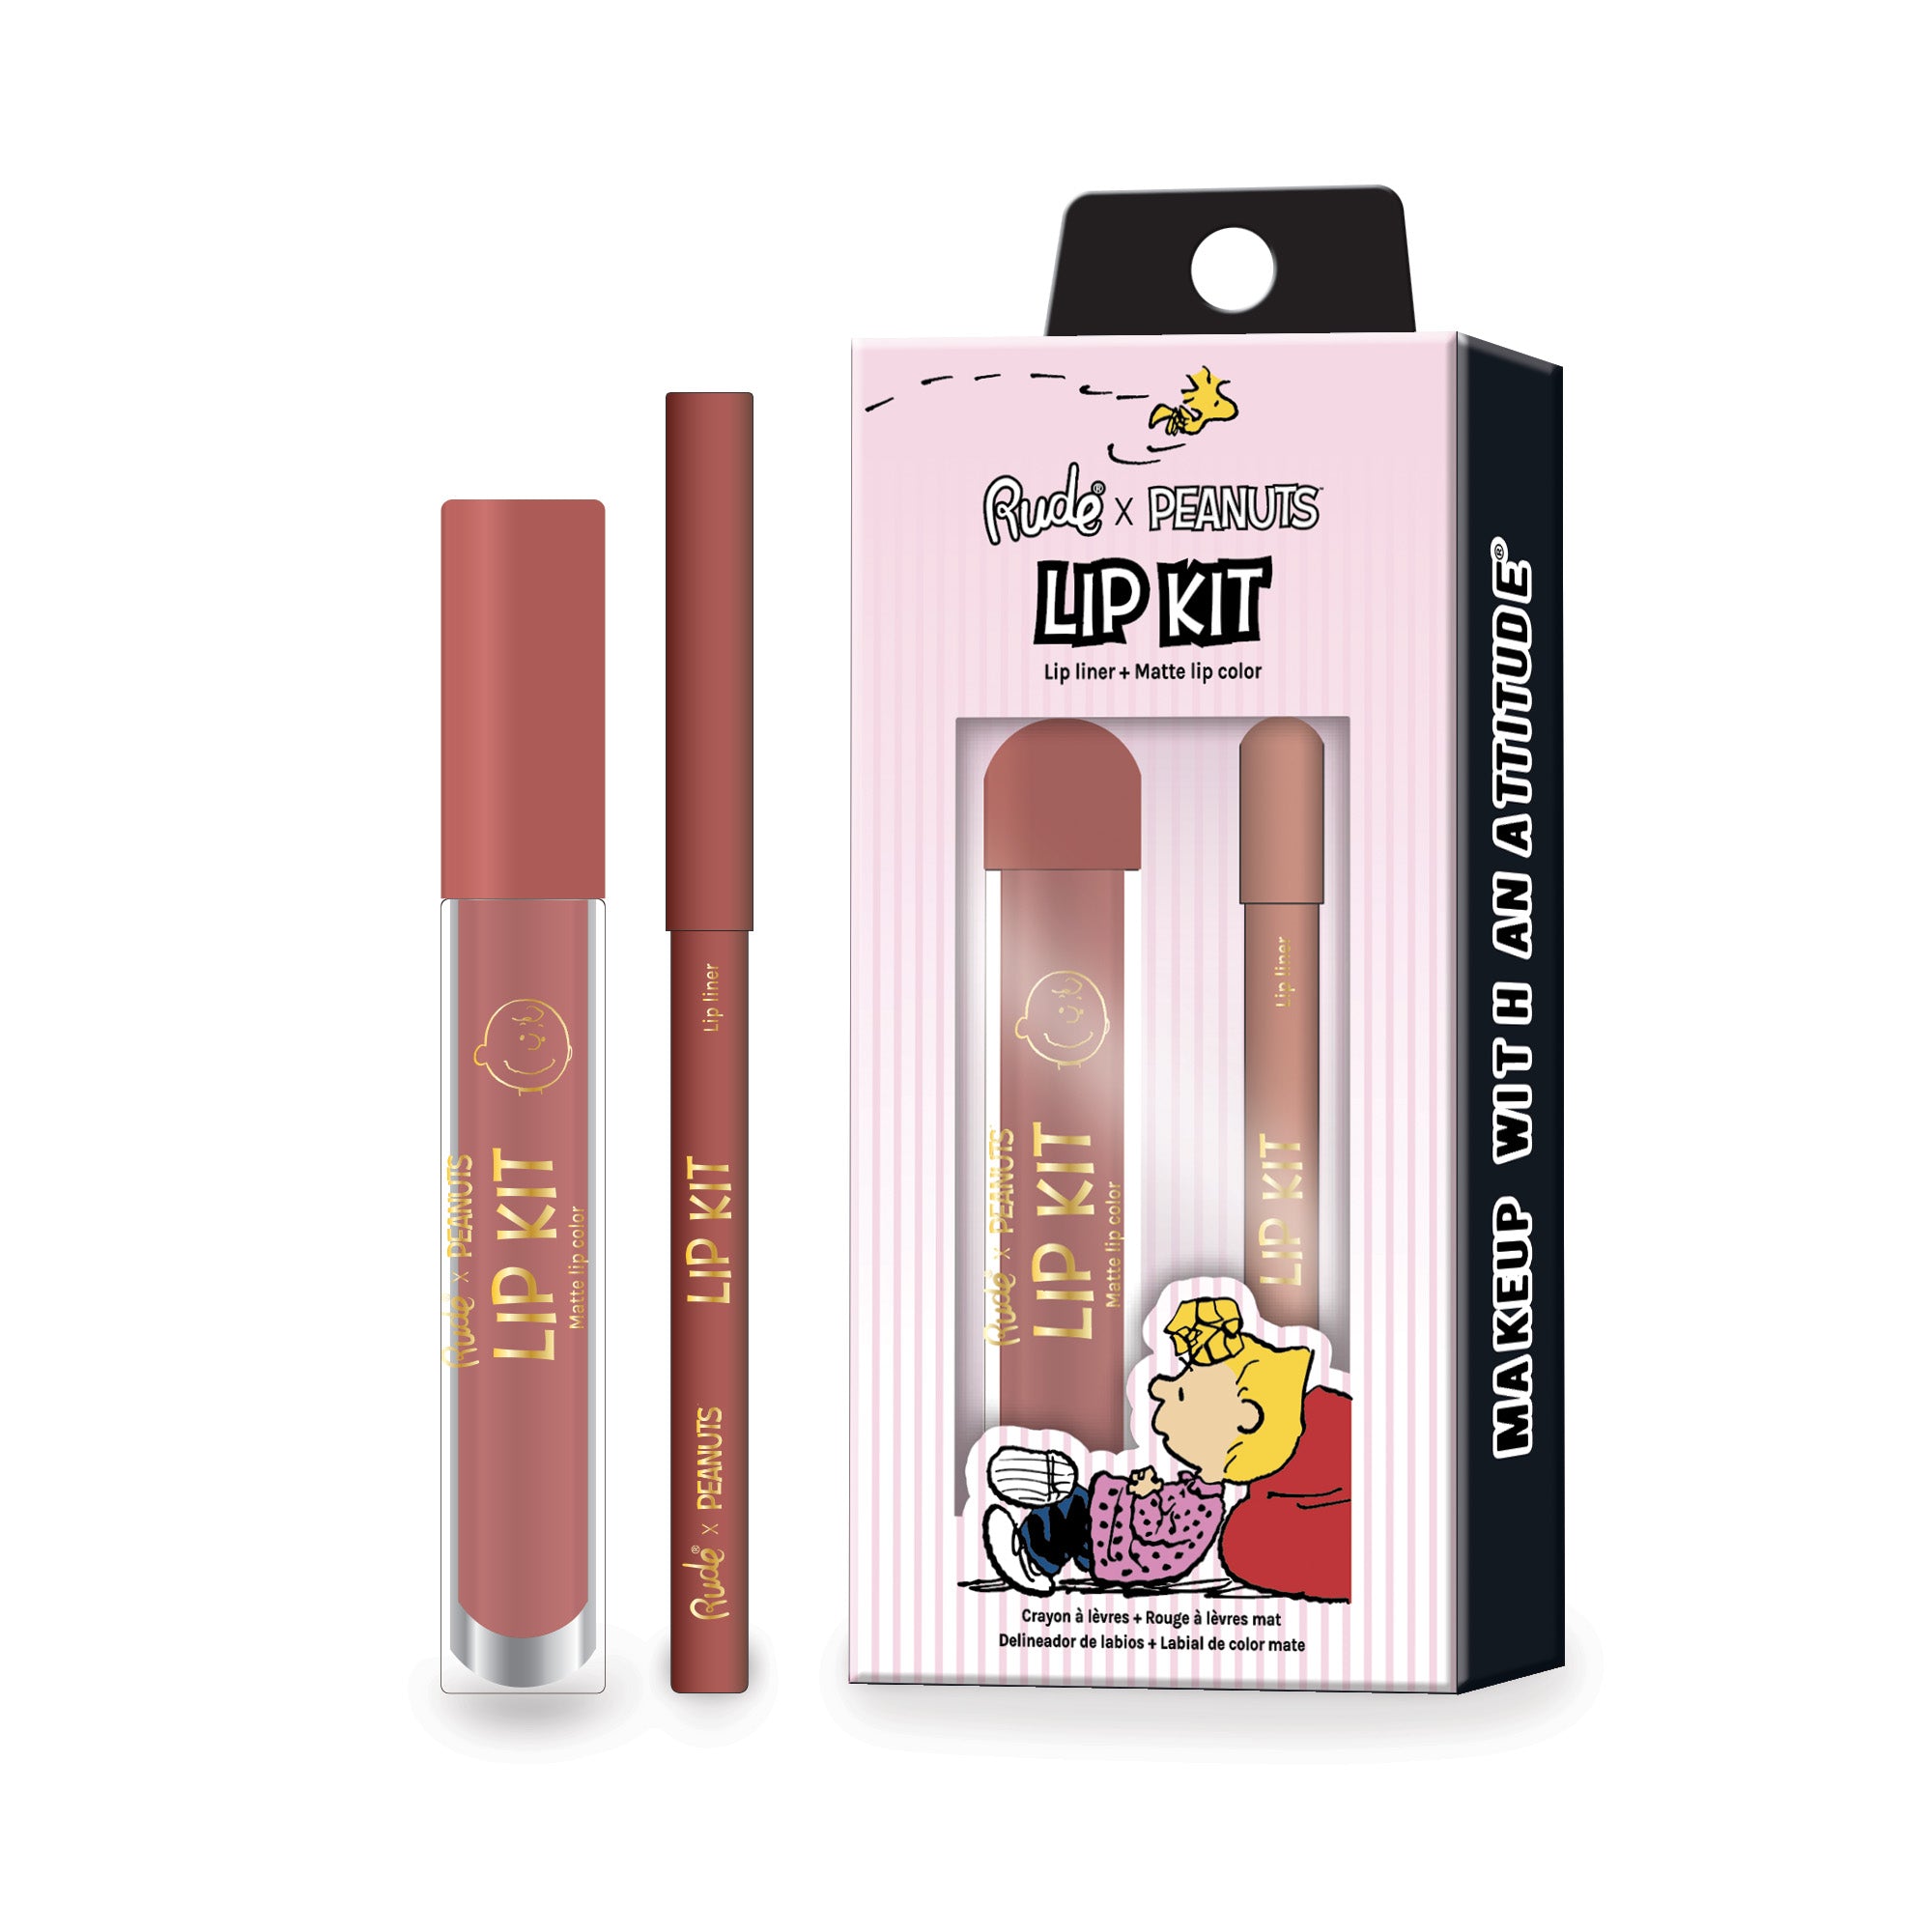 RUDE Peanuts Lip Kit - Lip Liner + Matte Lip Color